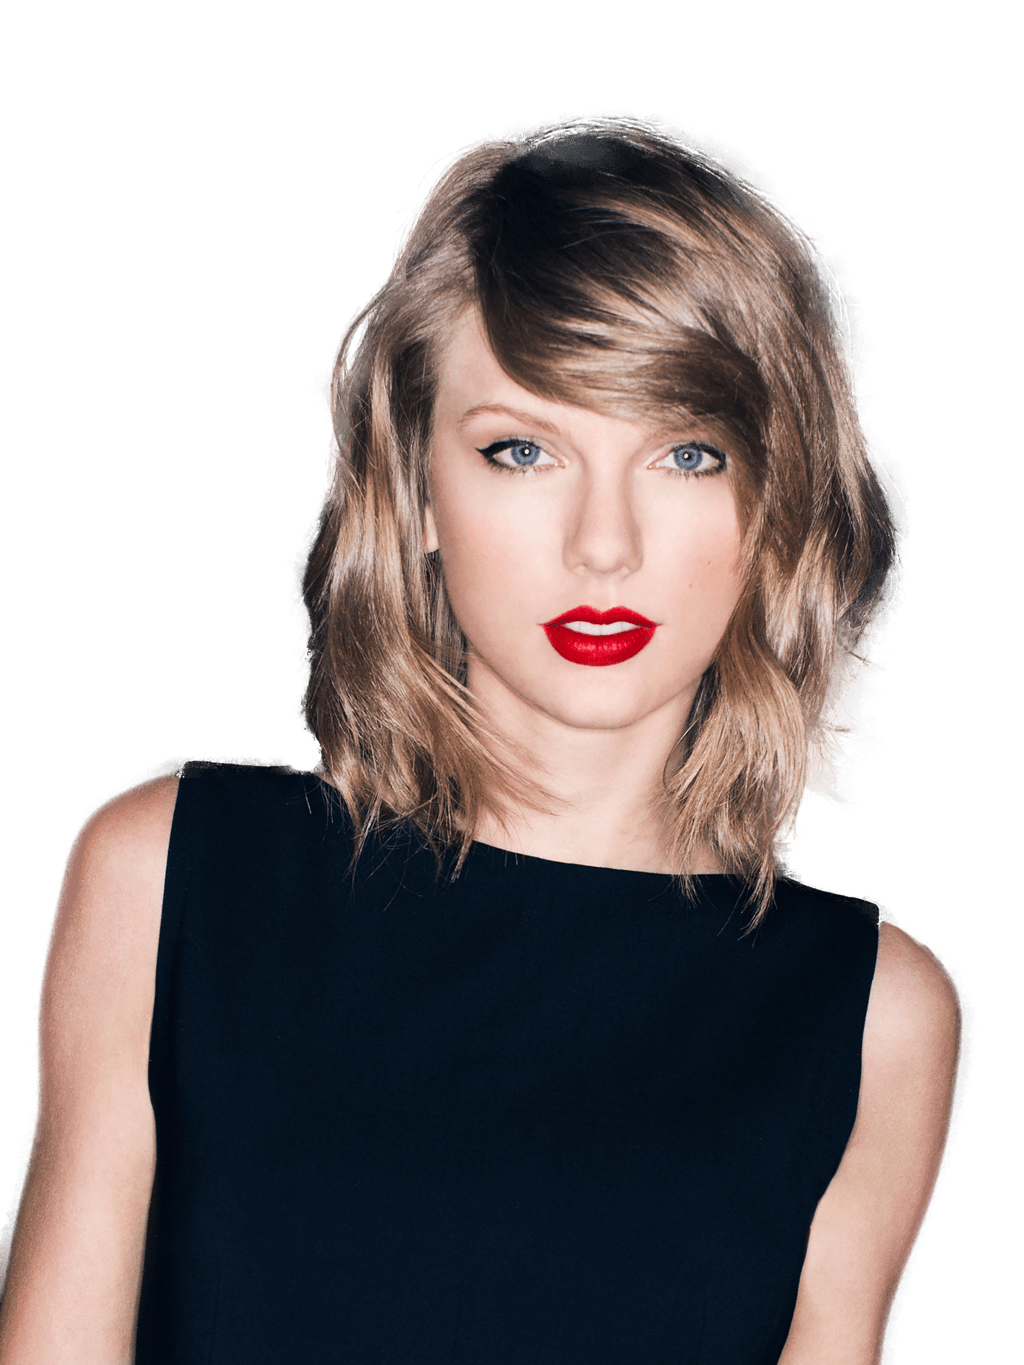 Black Dress Taylor Swift - Taylor Swift Clipart